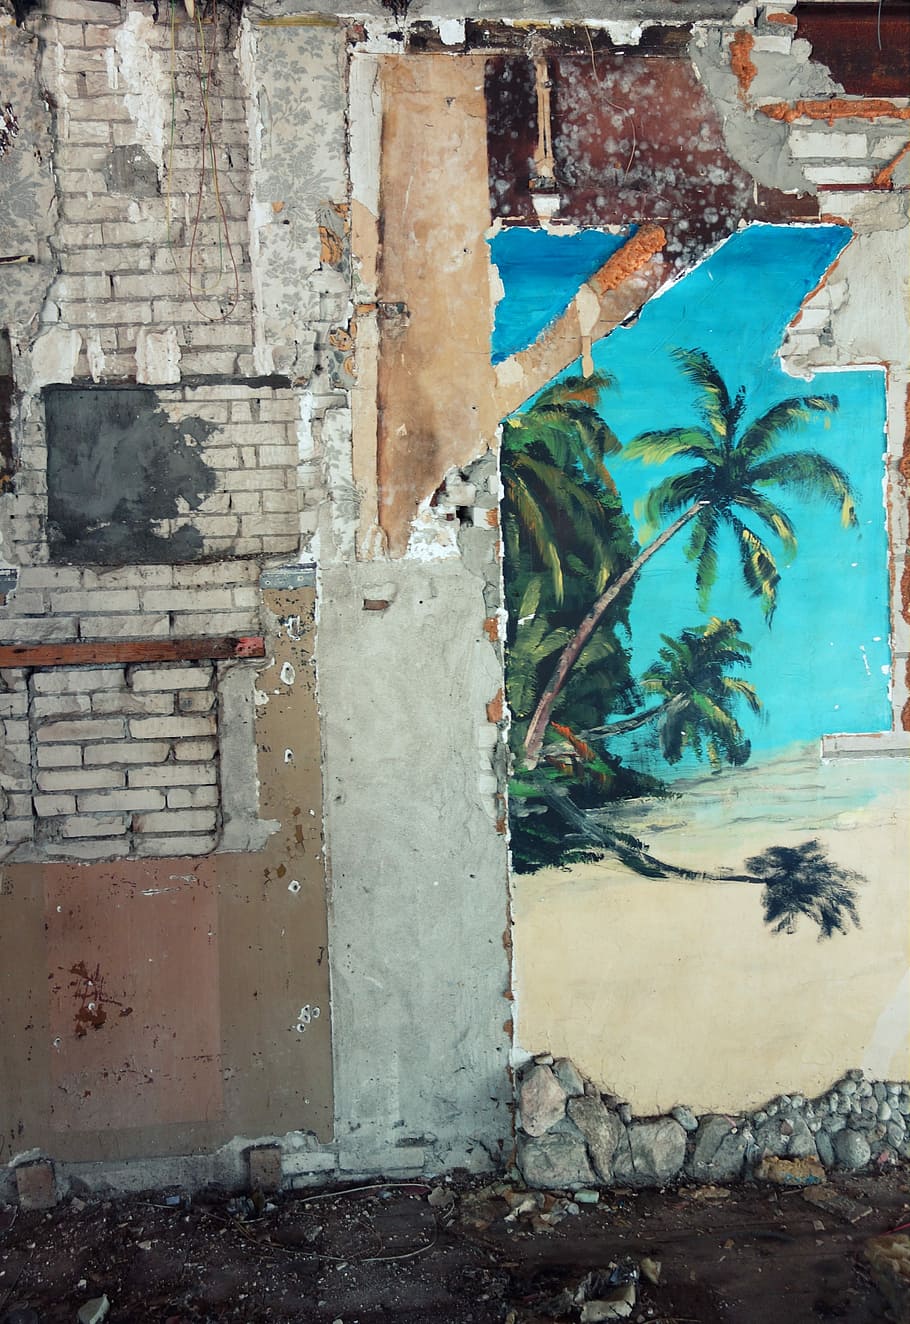 Decadencia, Ruina, Transcurrido, Destrucción, licencia, pintura mural, palmeras, ironía, feriado, pared